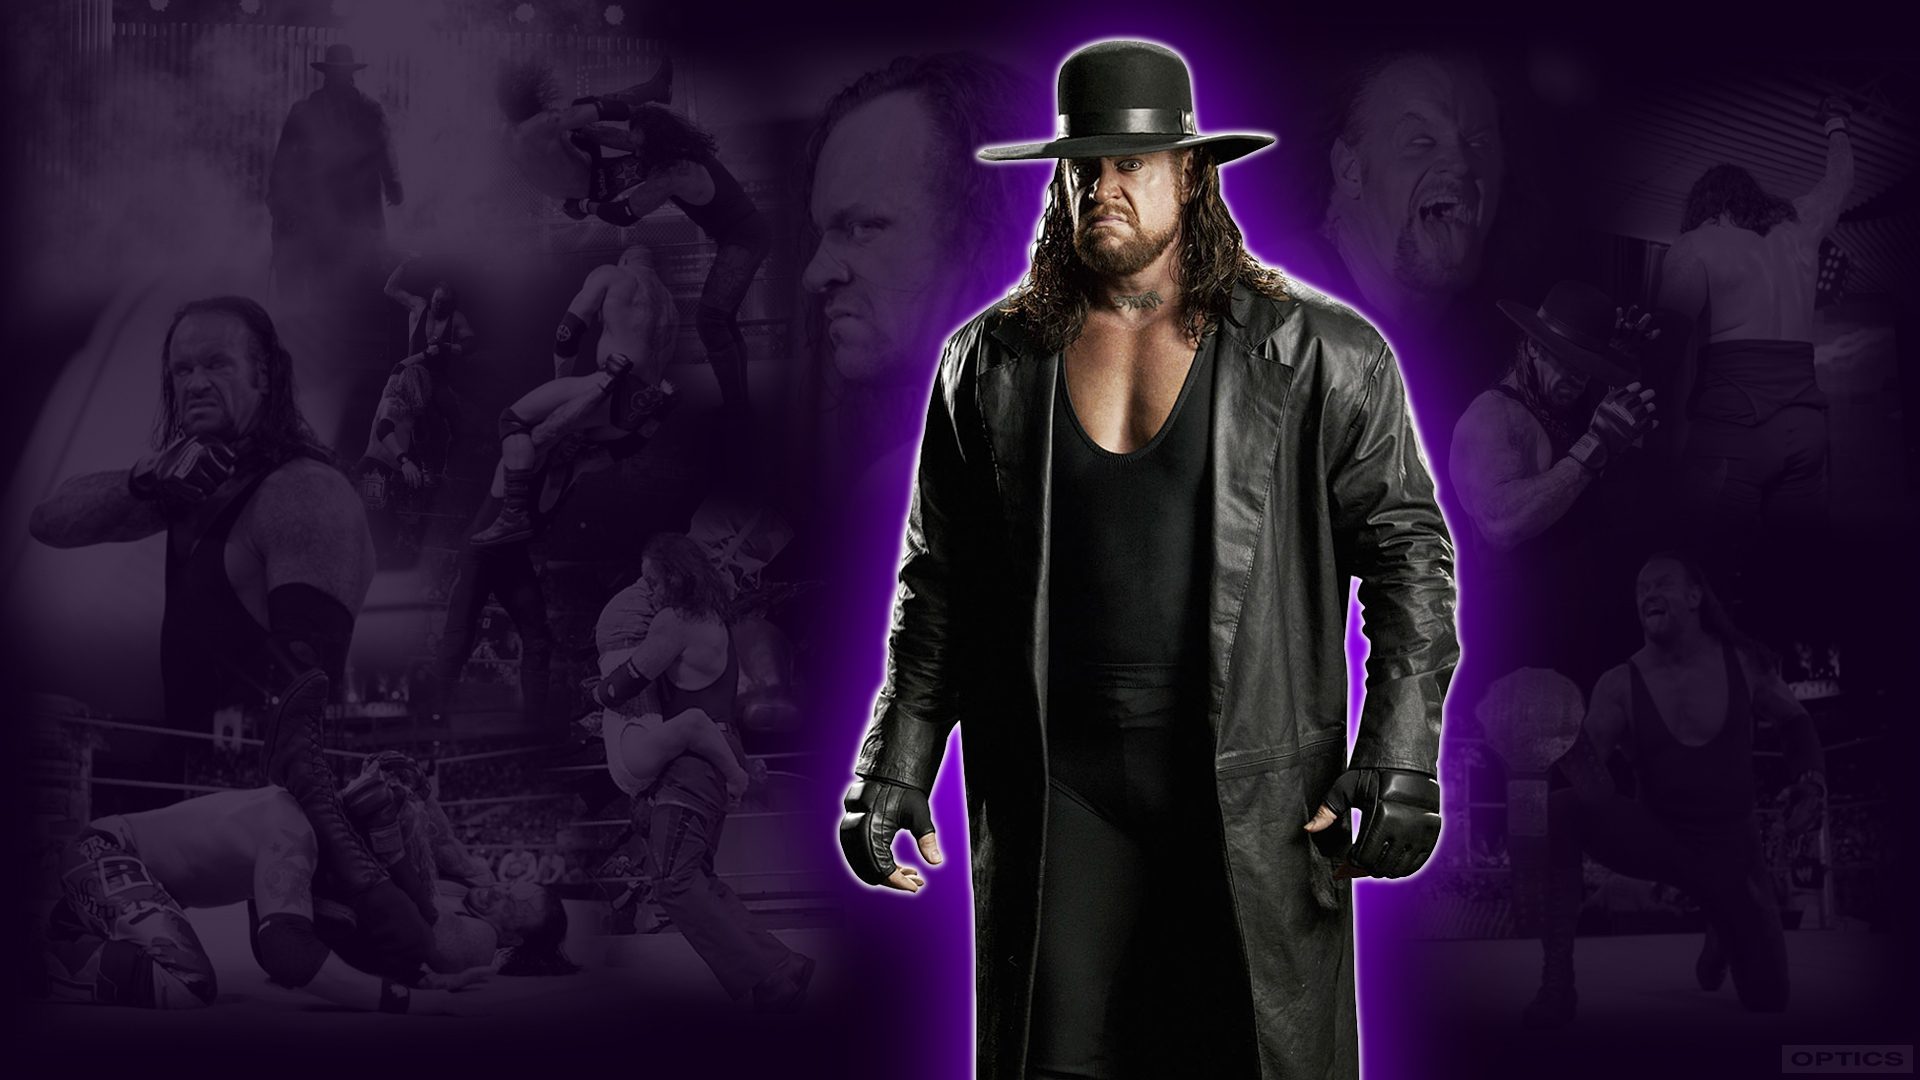 Undertaker Wwe Wallpaper Pics Pictures Image Photos Desktop